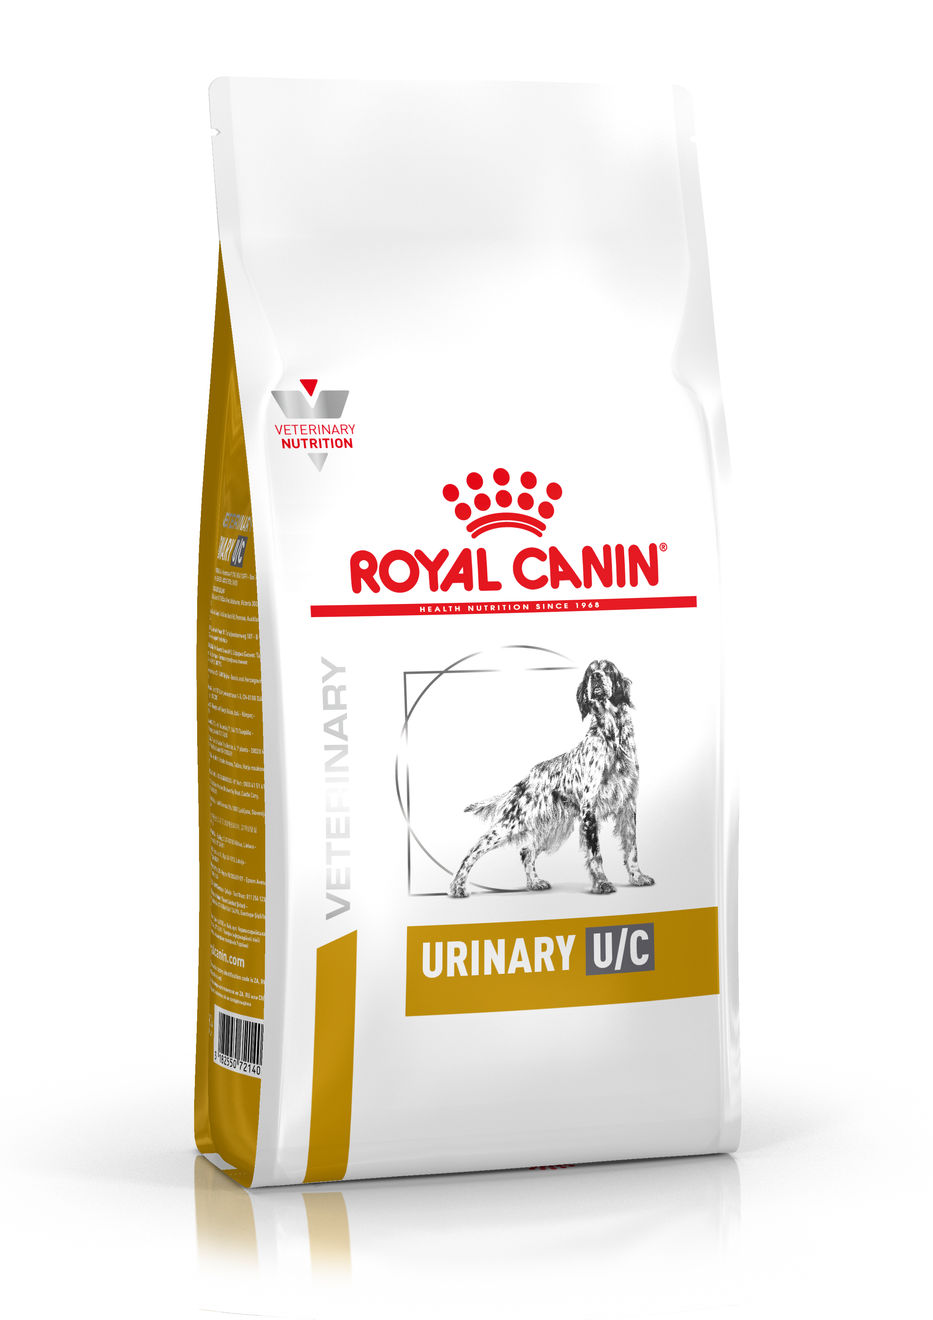 Royal Canin U/C low purine<br> 1 x 7.5 kg